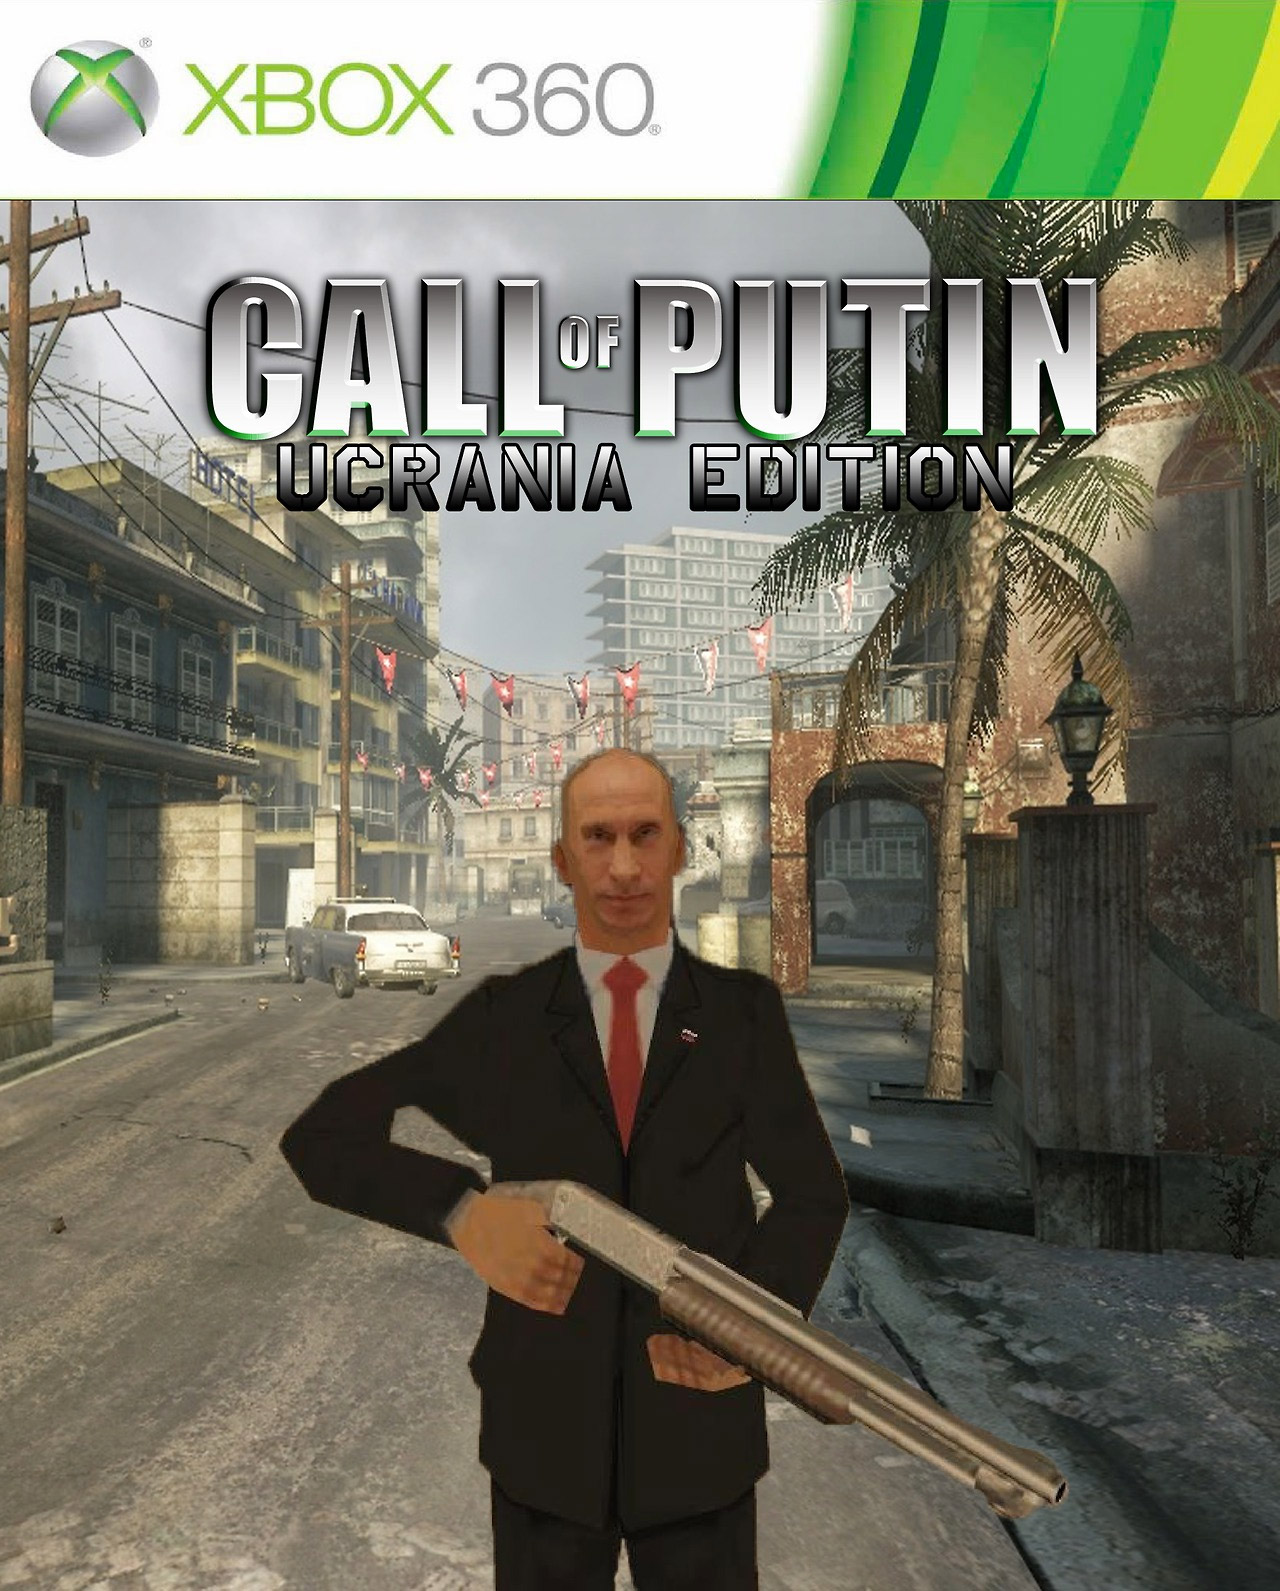 Call of Putin